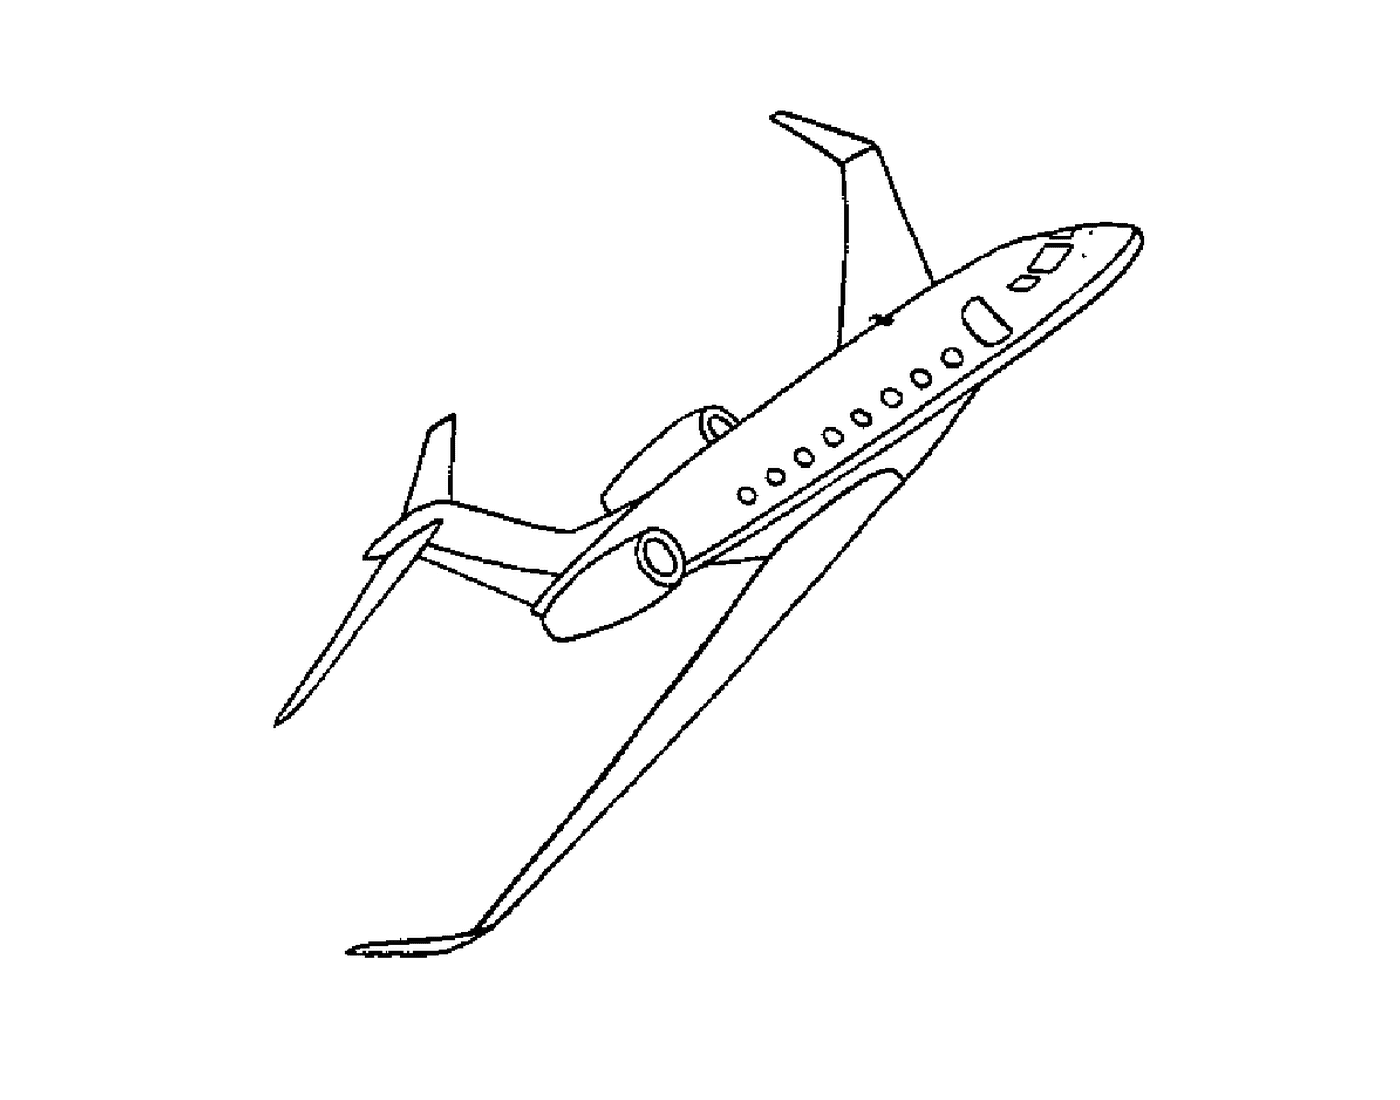  Un avión volando 